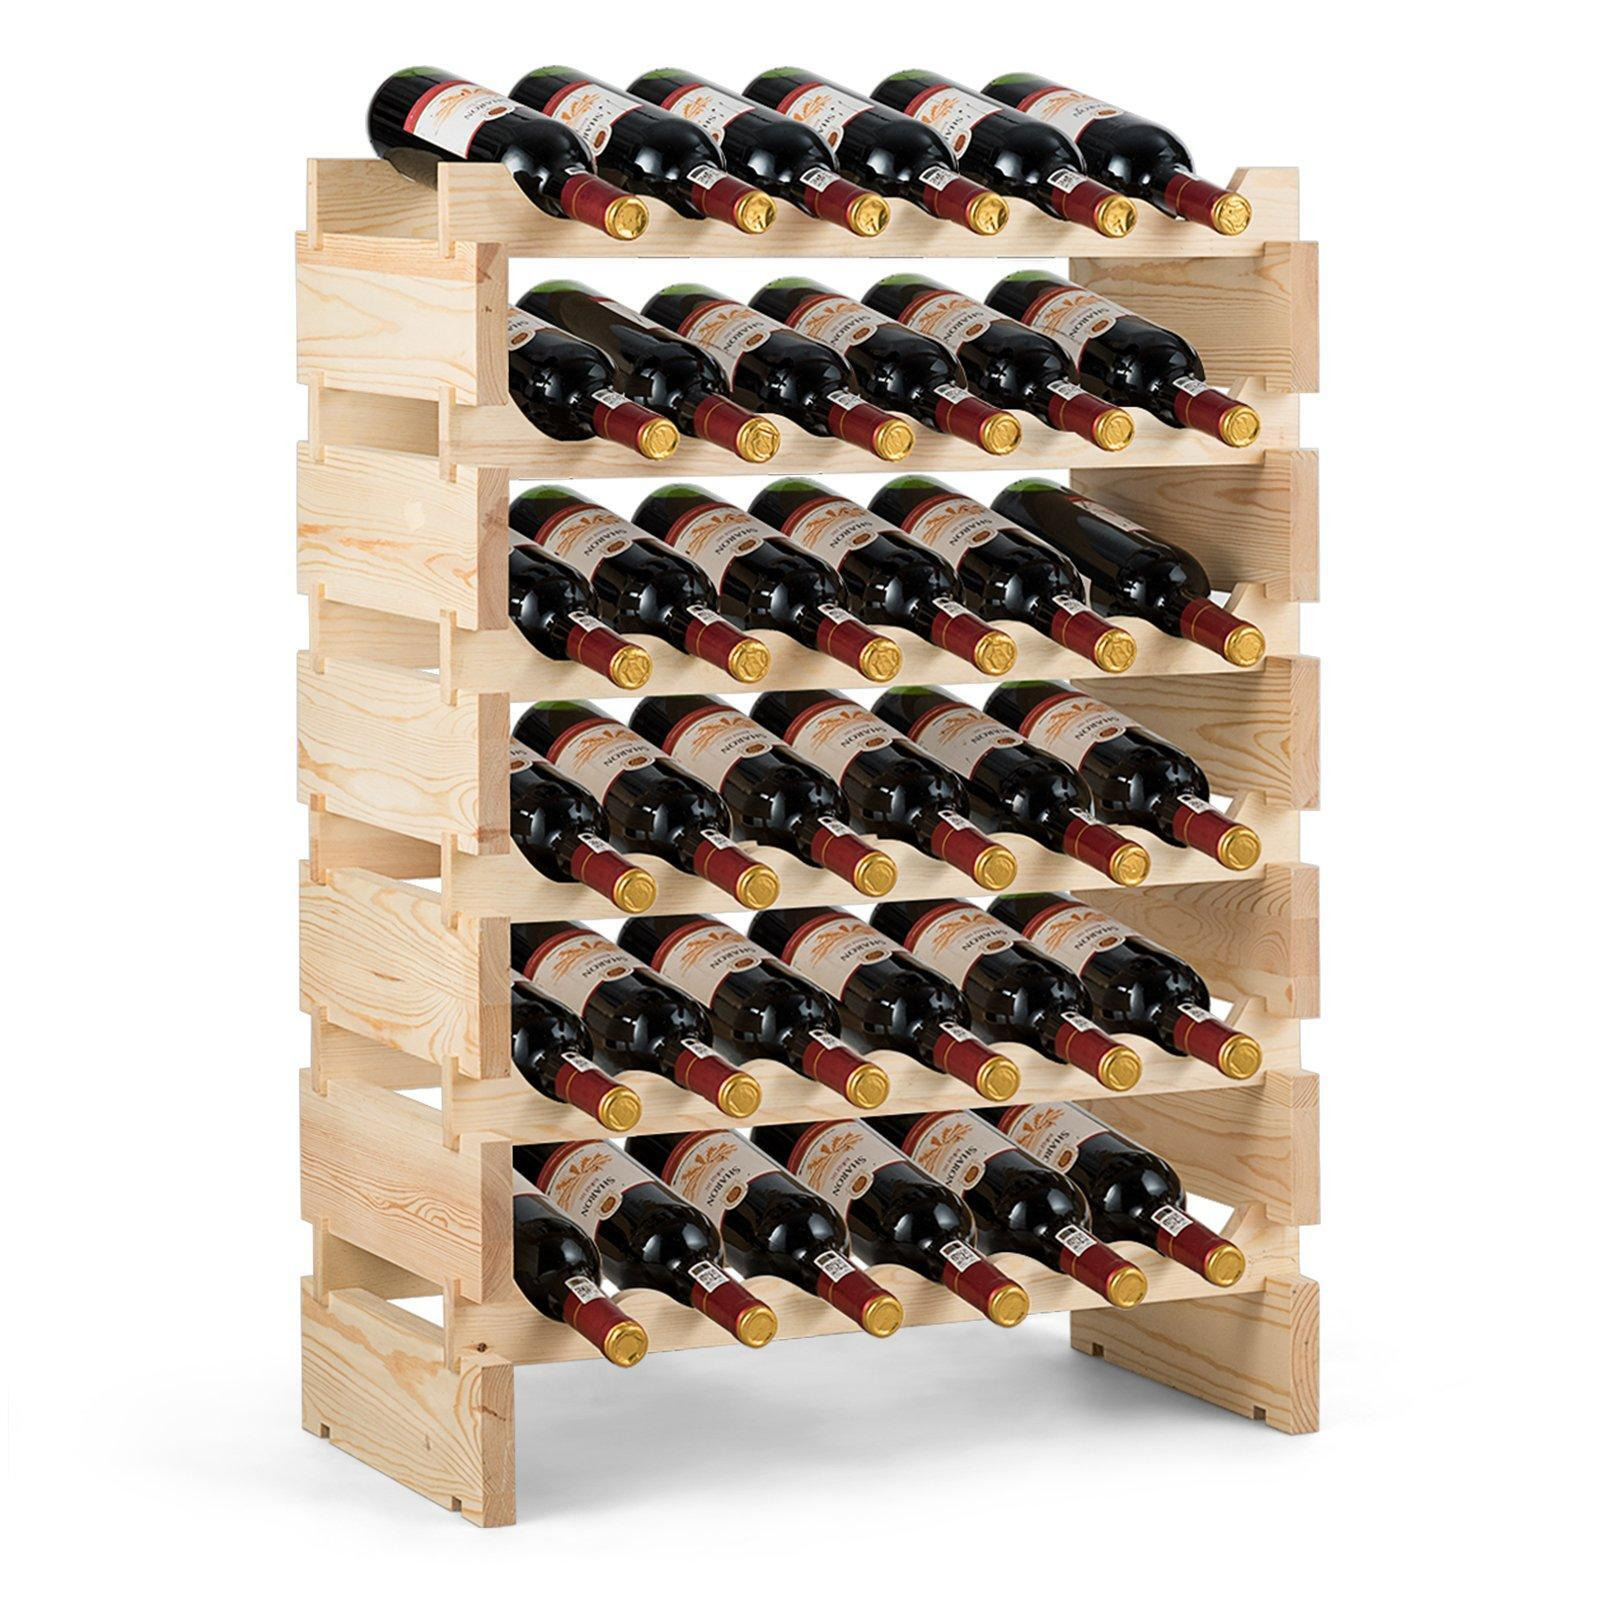 36 Bottles Wine Rack Freestanding Wine Storage Display Rack Pine Wood Wine Stand - image 1